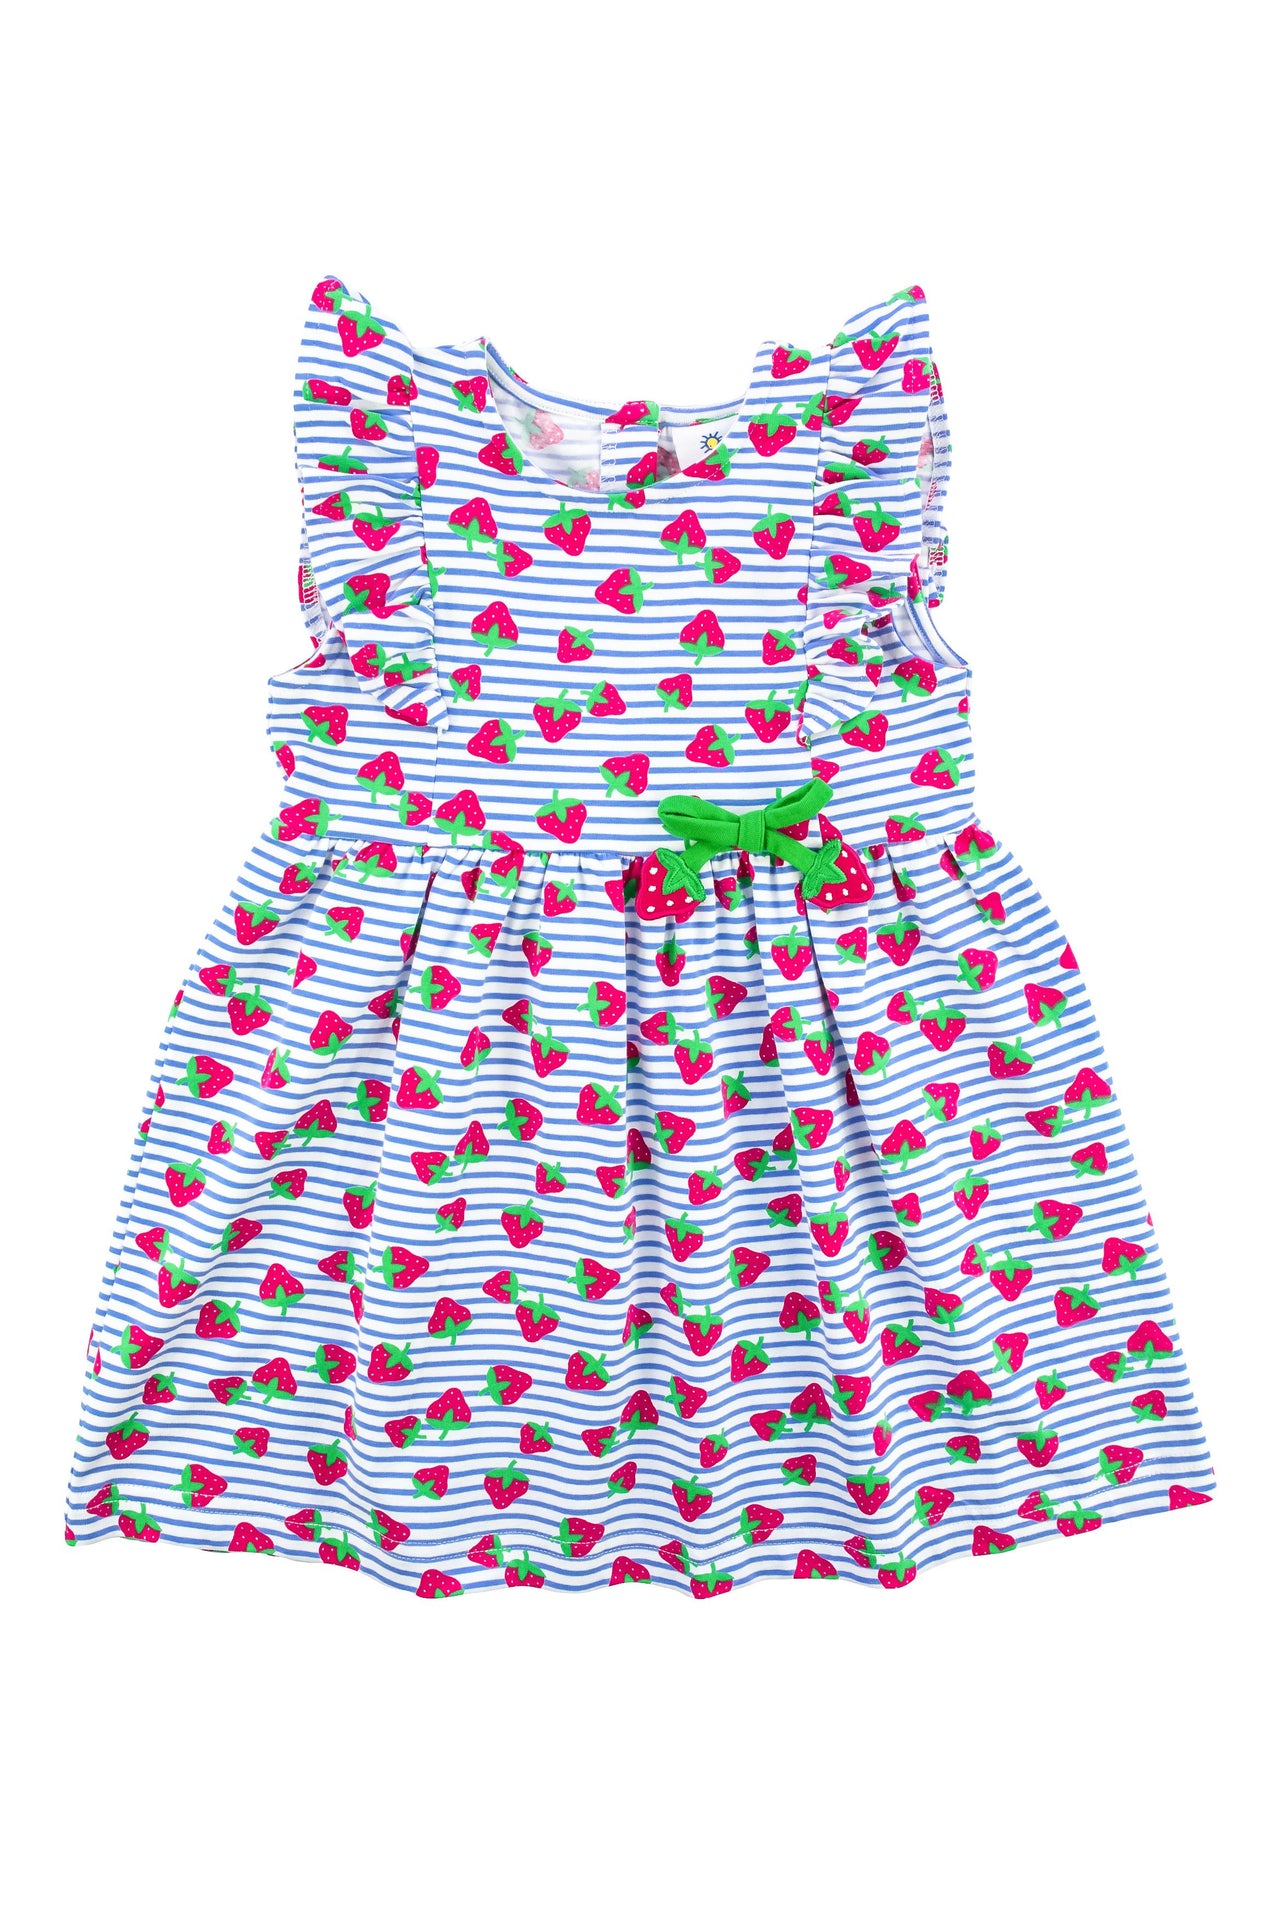 Florence Eiseman Strawberry Print Dress C5182 5012